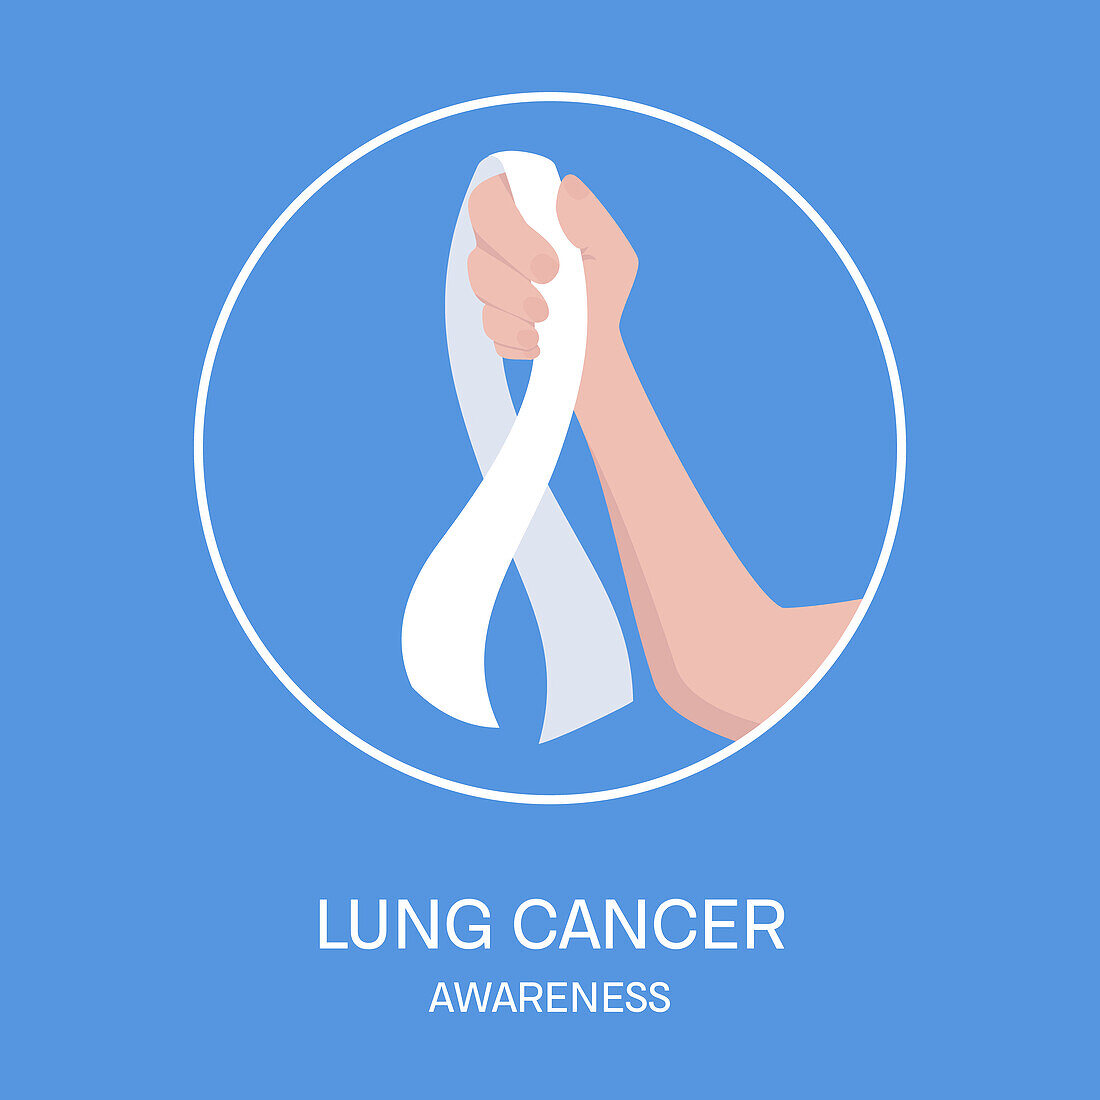 Lung cancer awareness ribbon, conceptual illustration